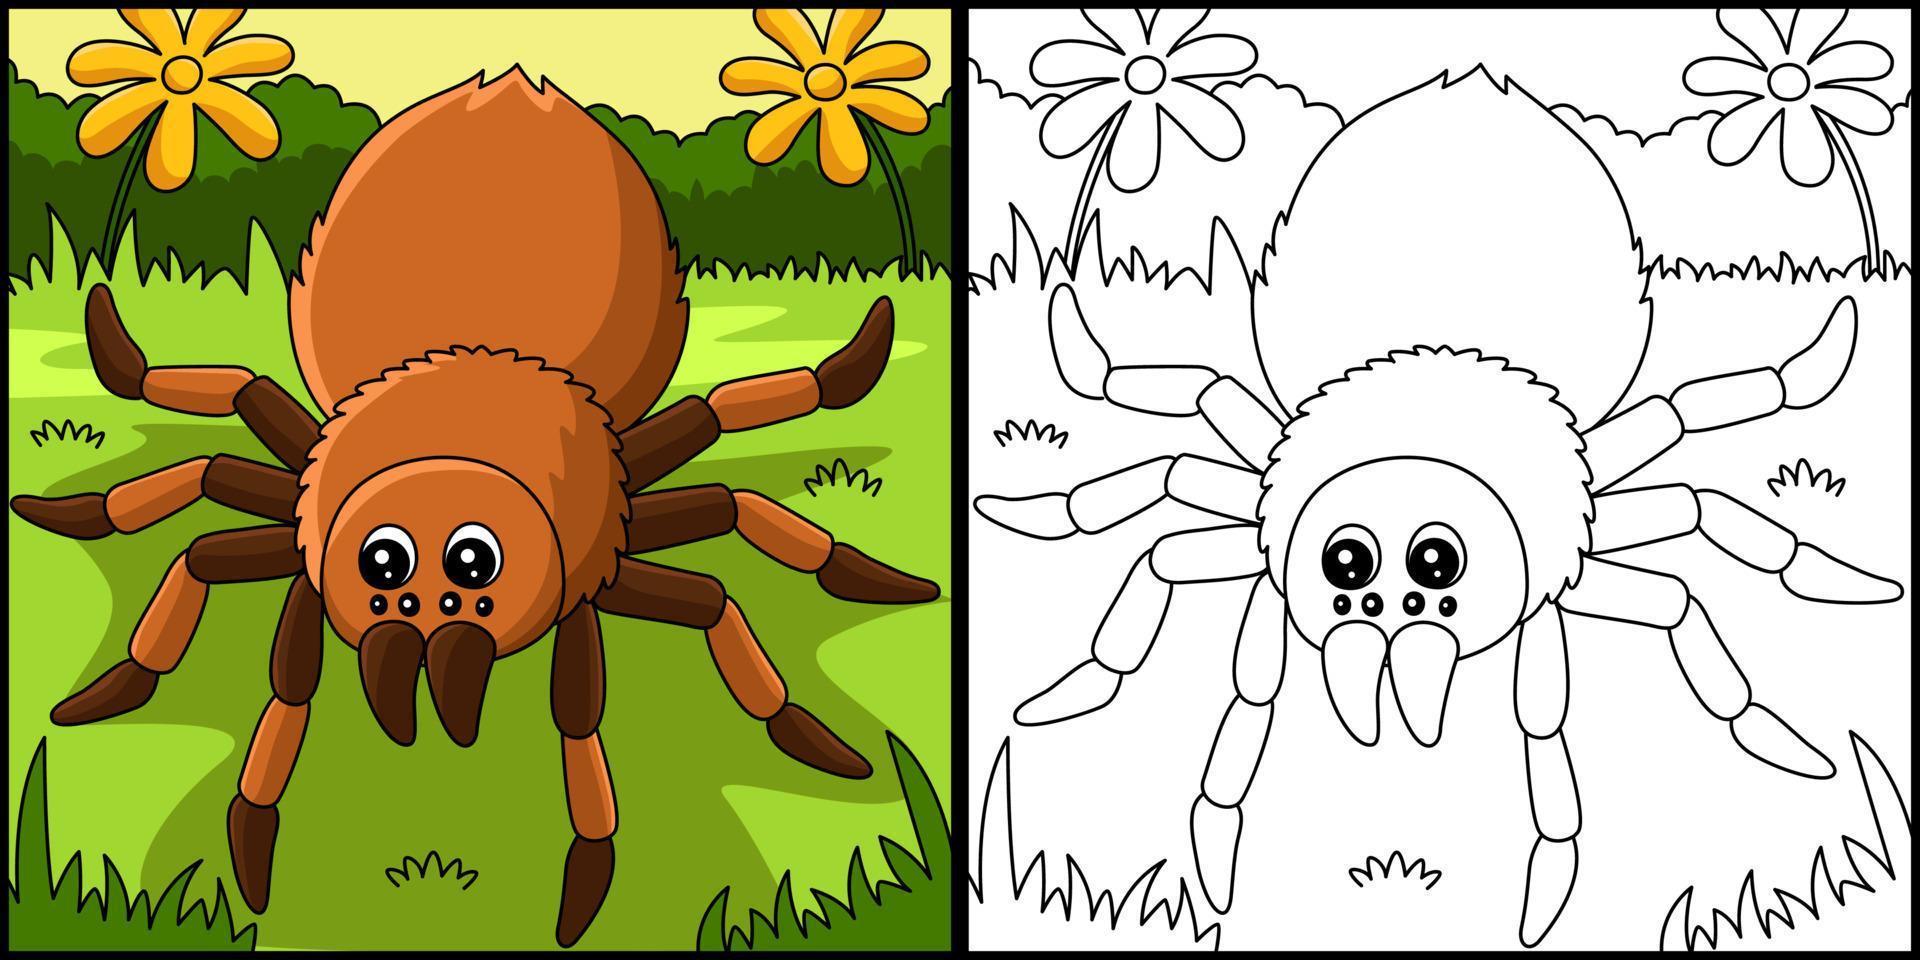 Tarantula Animal Coloring Page Illustration vector